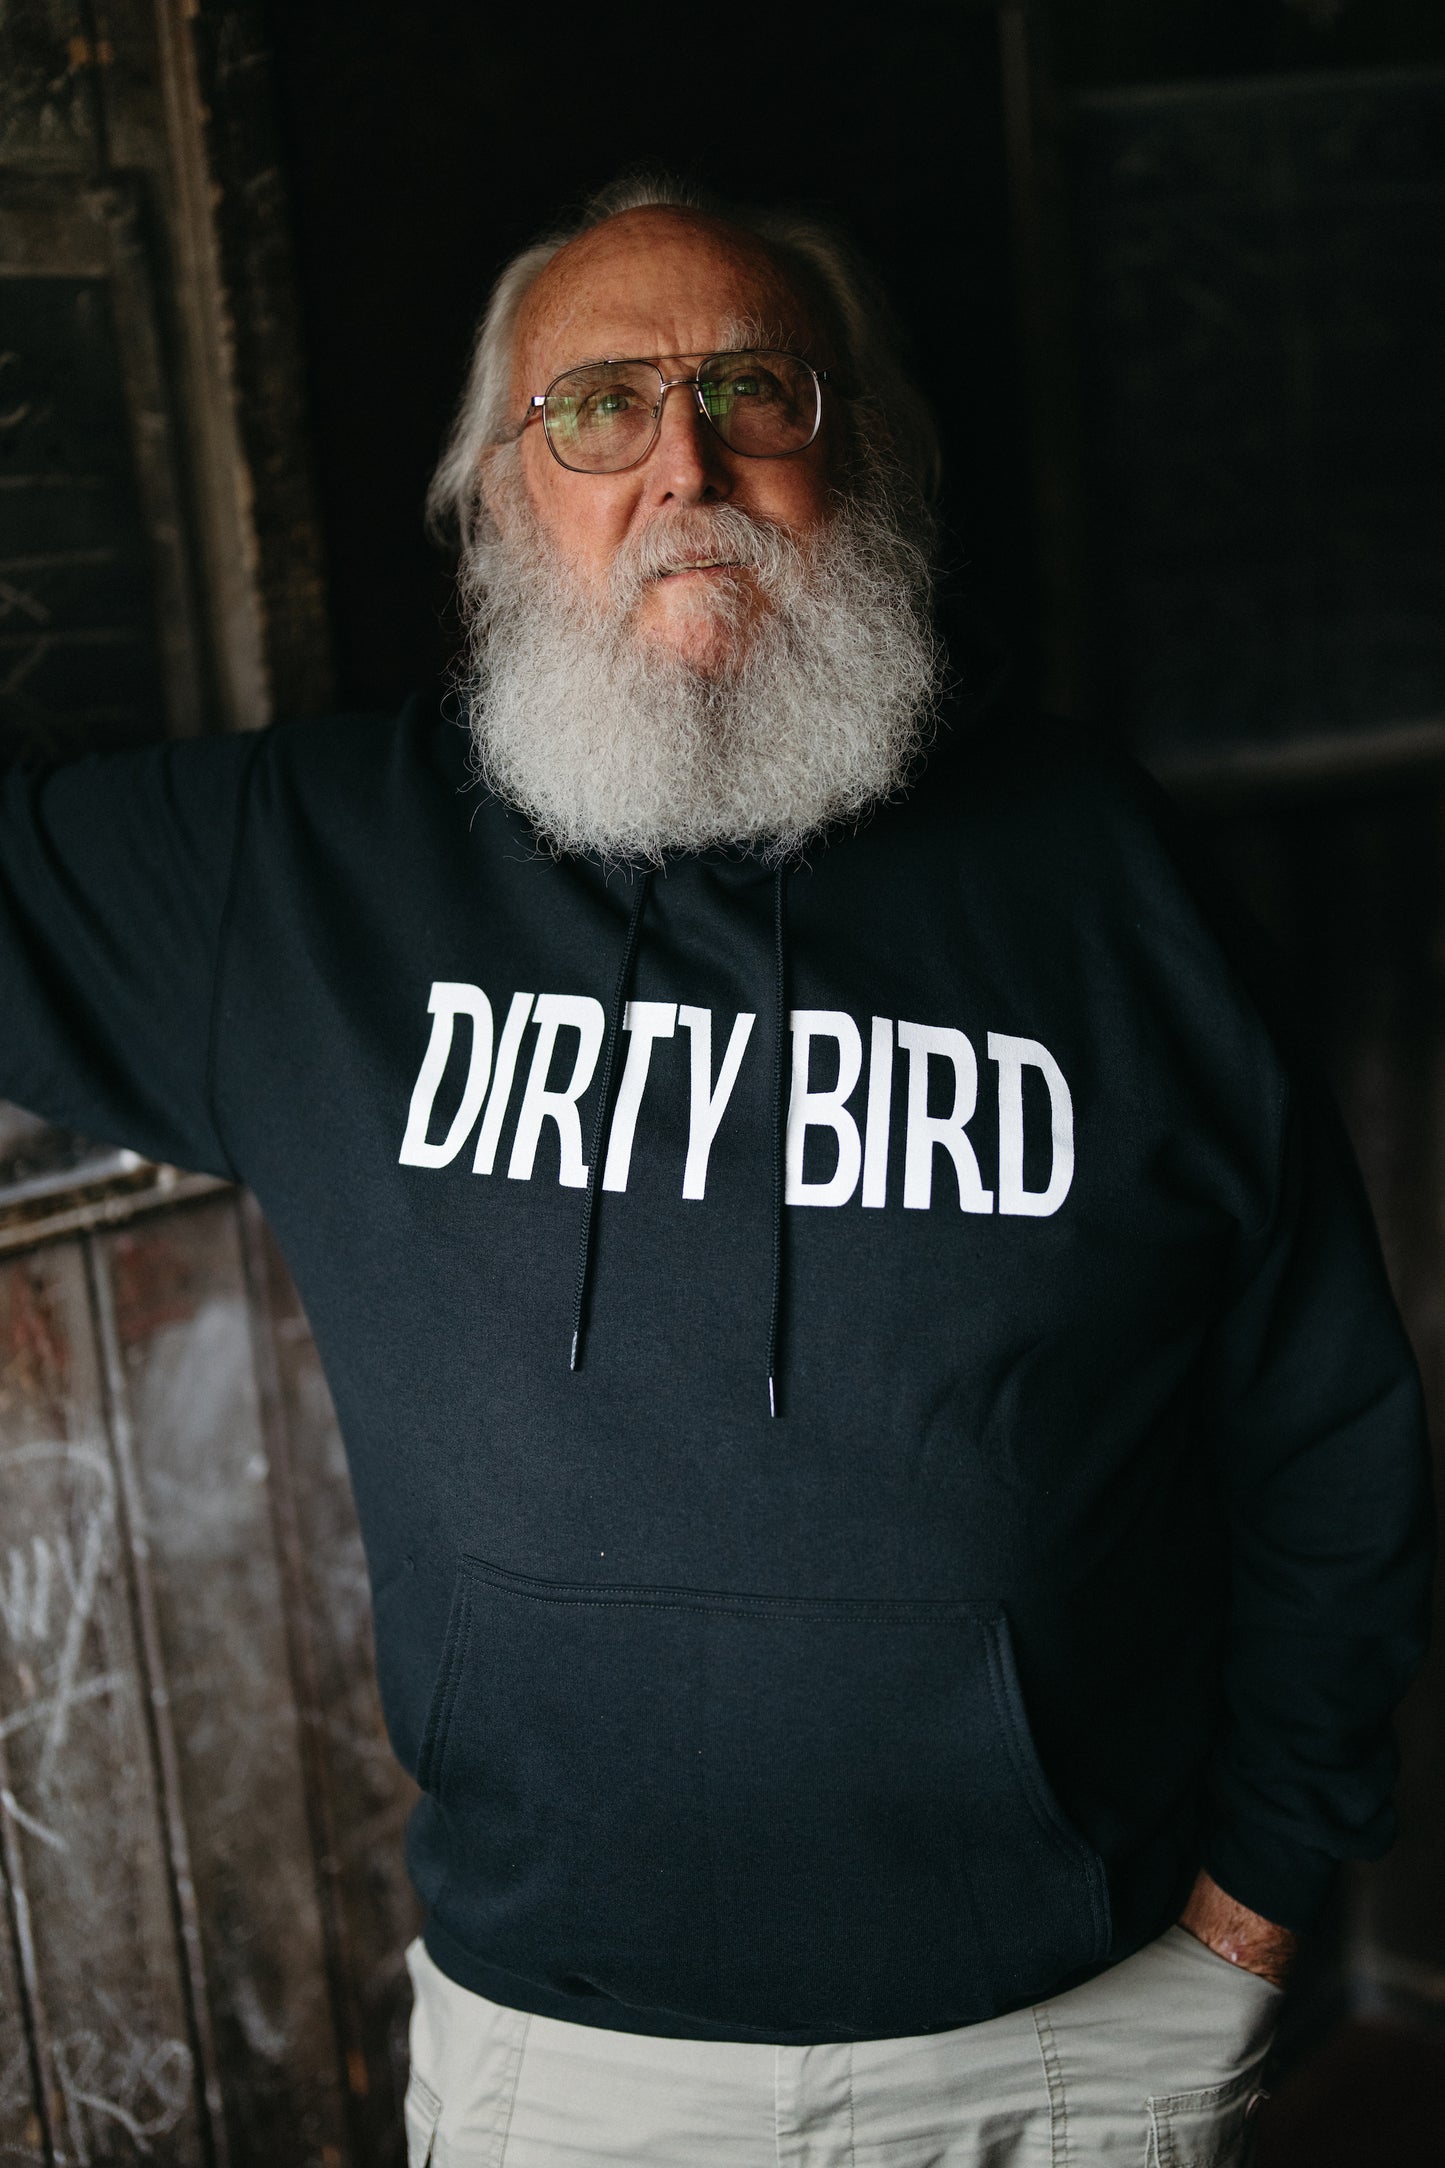 Dirty Bird Long-sleeve Sweatshirt in black